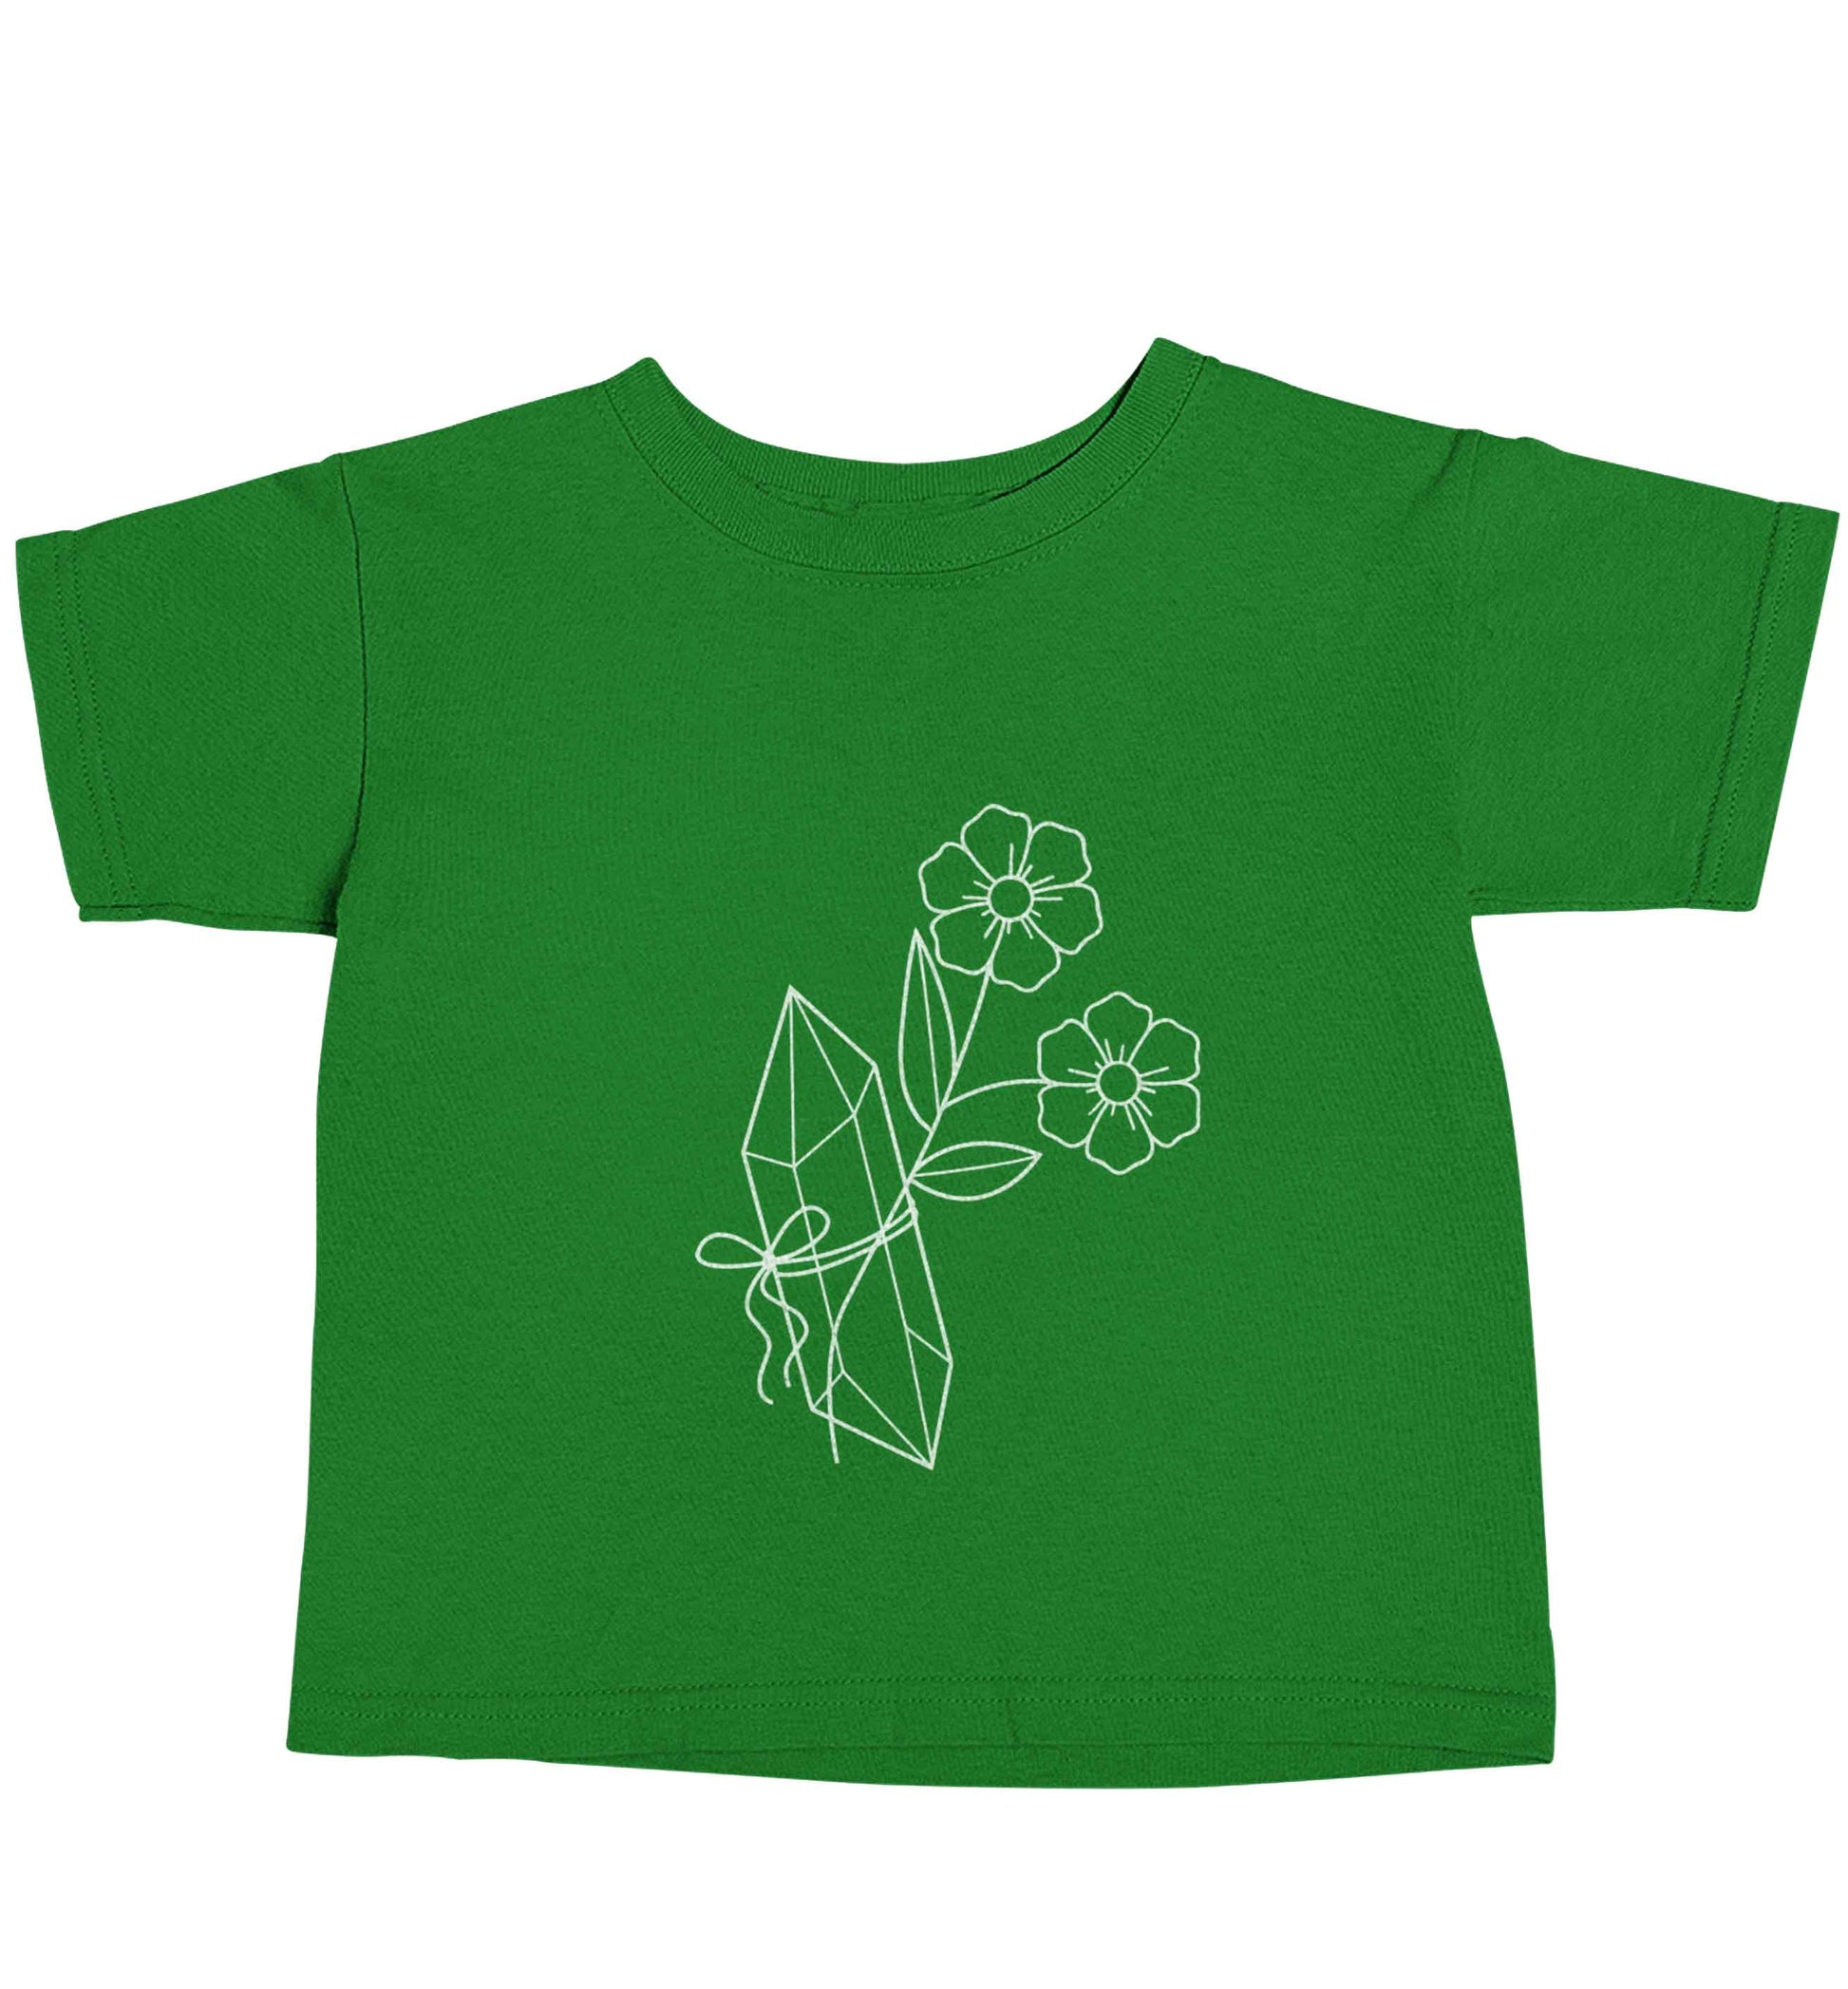 Crystal flower illustration green baby toddler Tshirt 2 Years